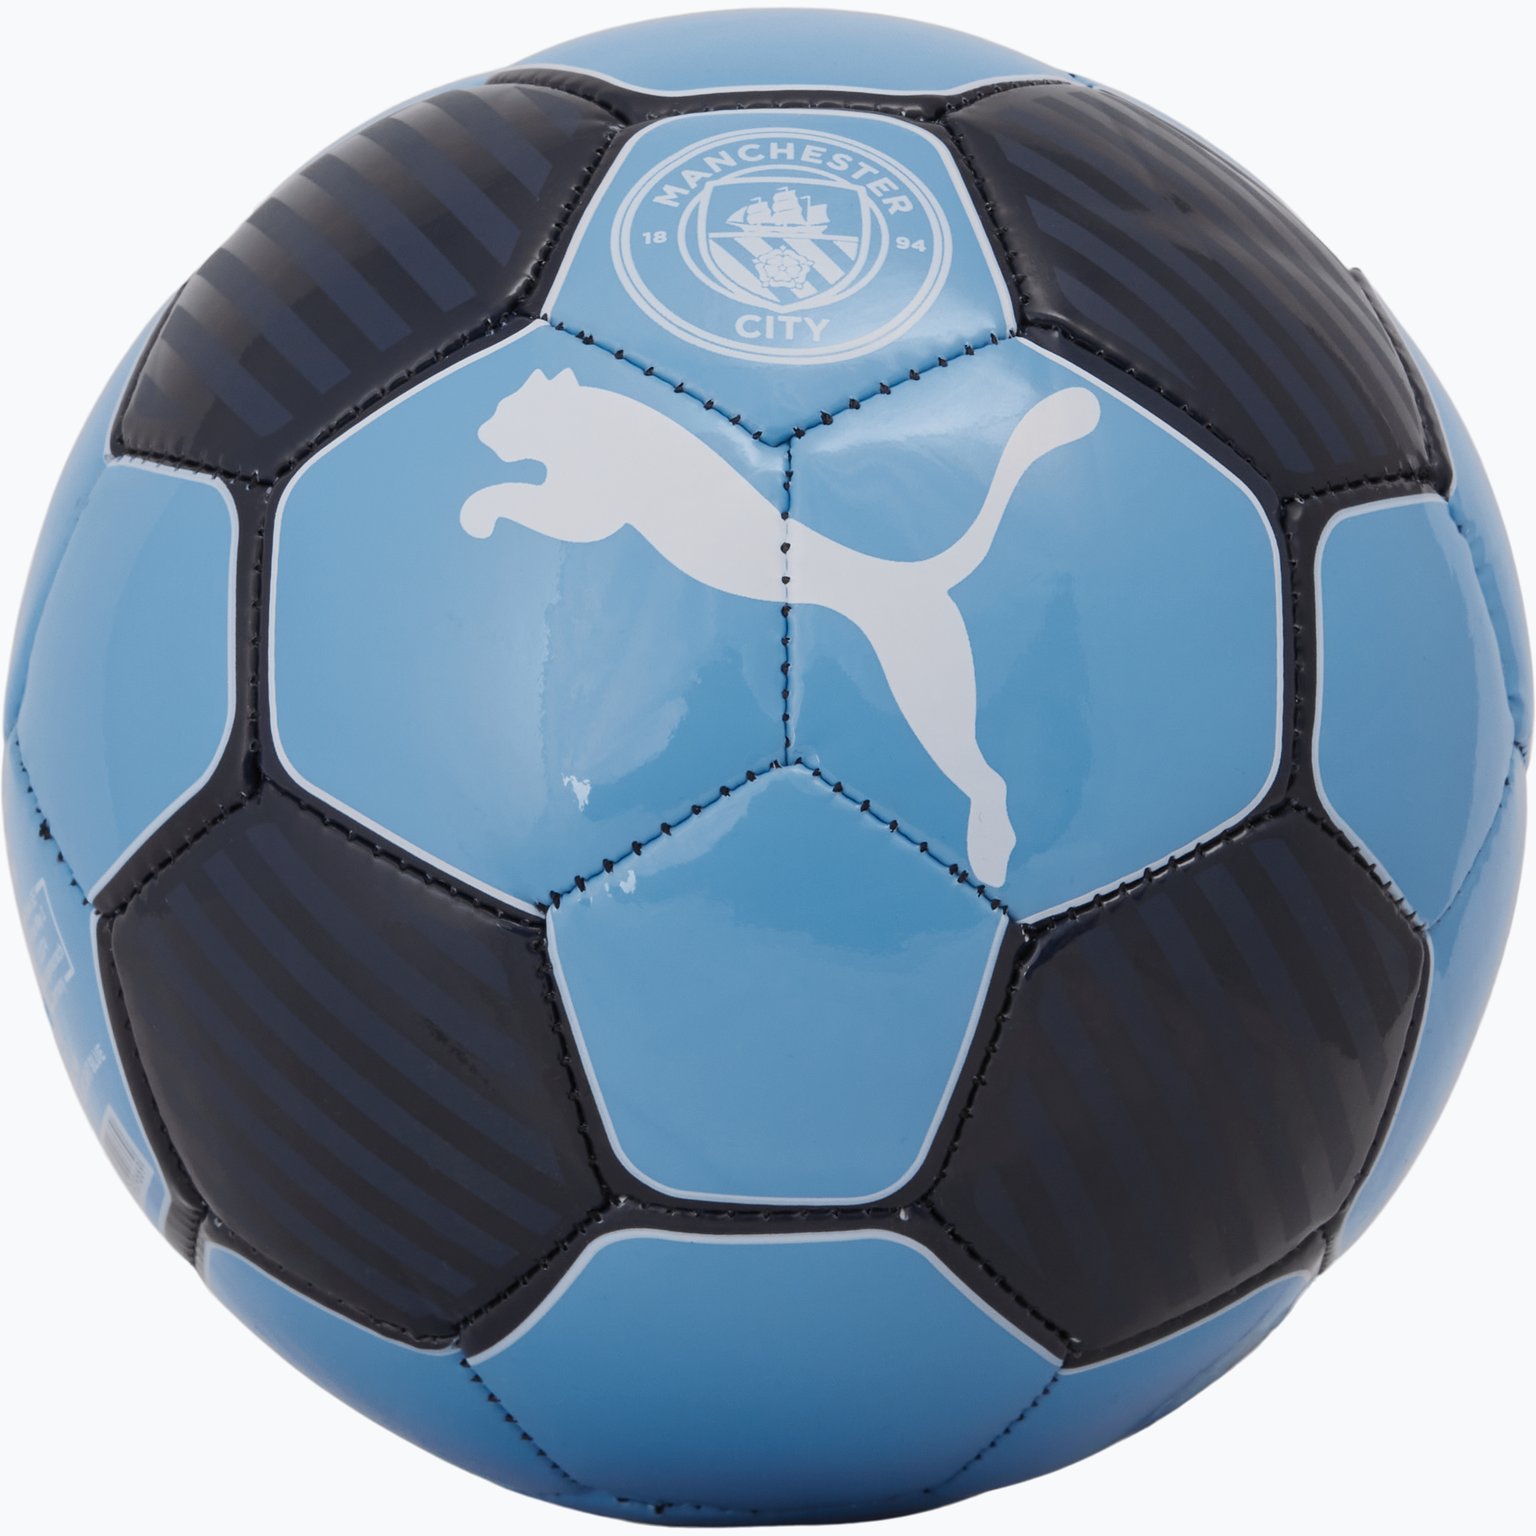 Manchester City ftblEssentials Mini fotboll